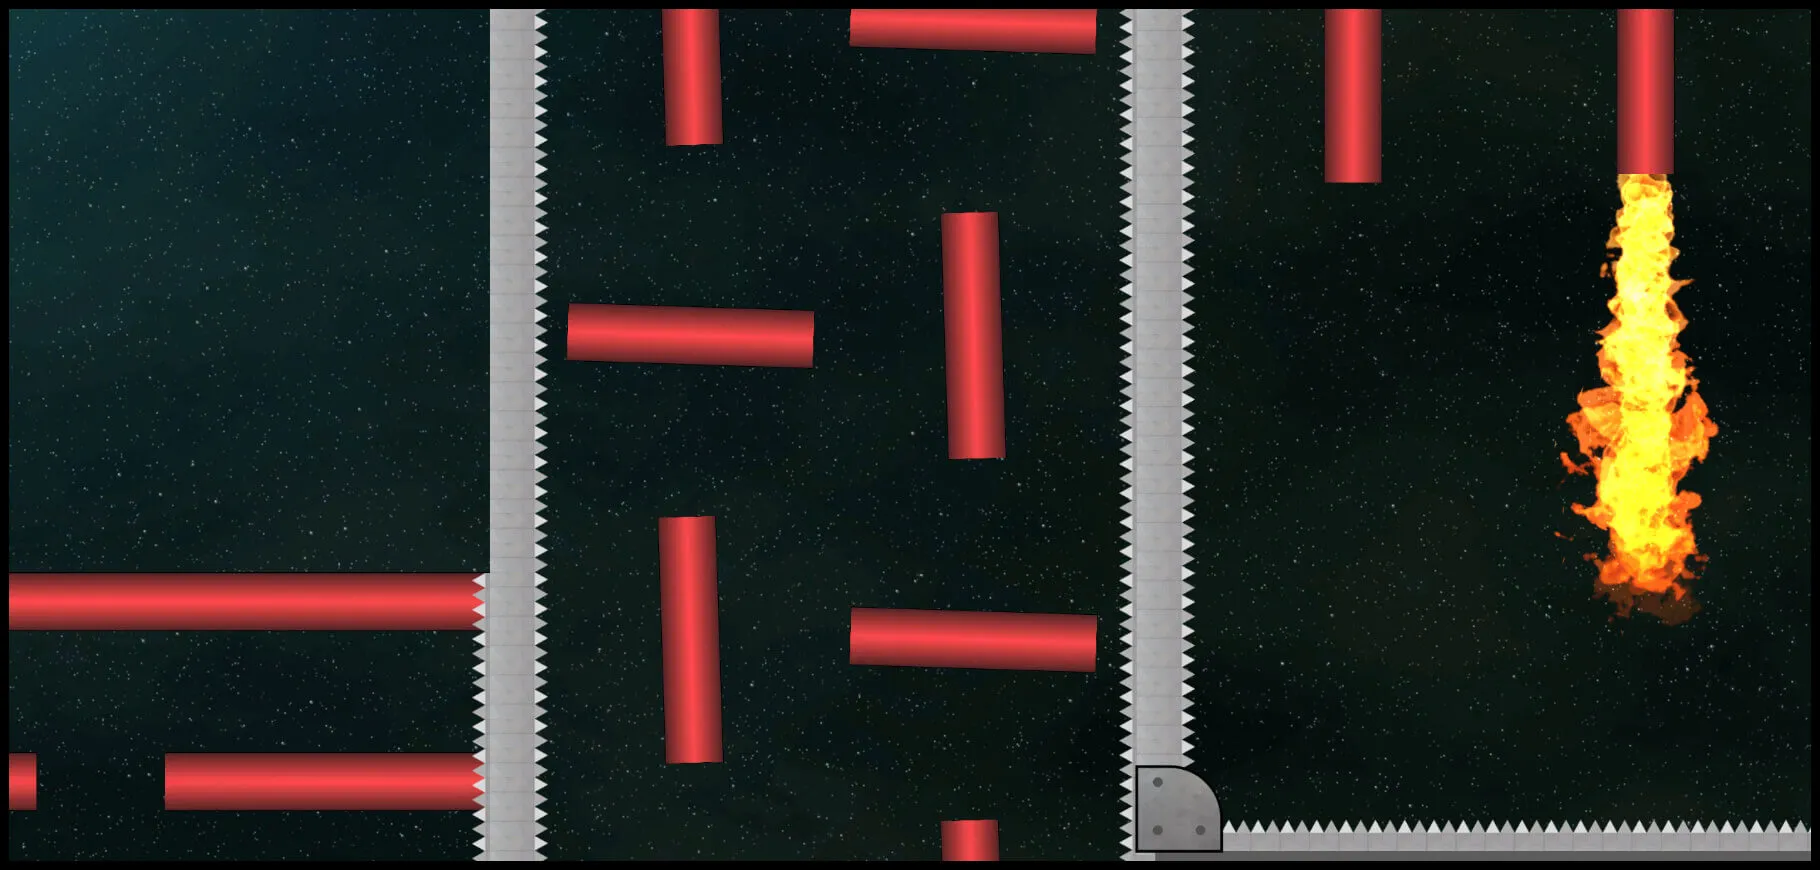 orbital level screenshot from the steam game reflex runner.